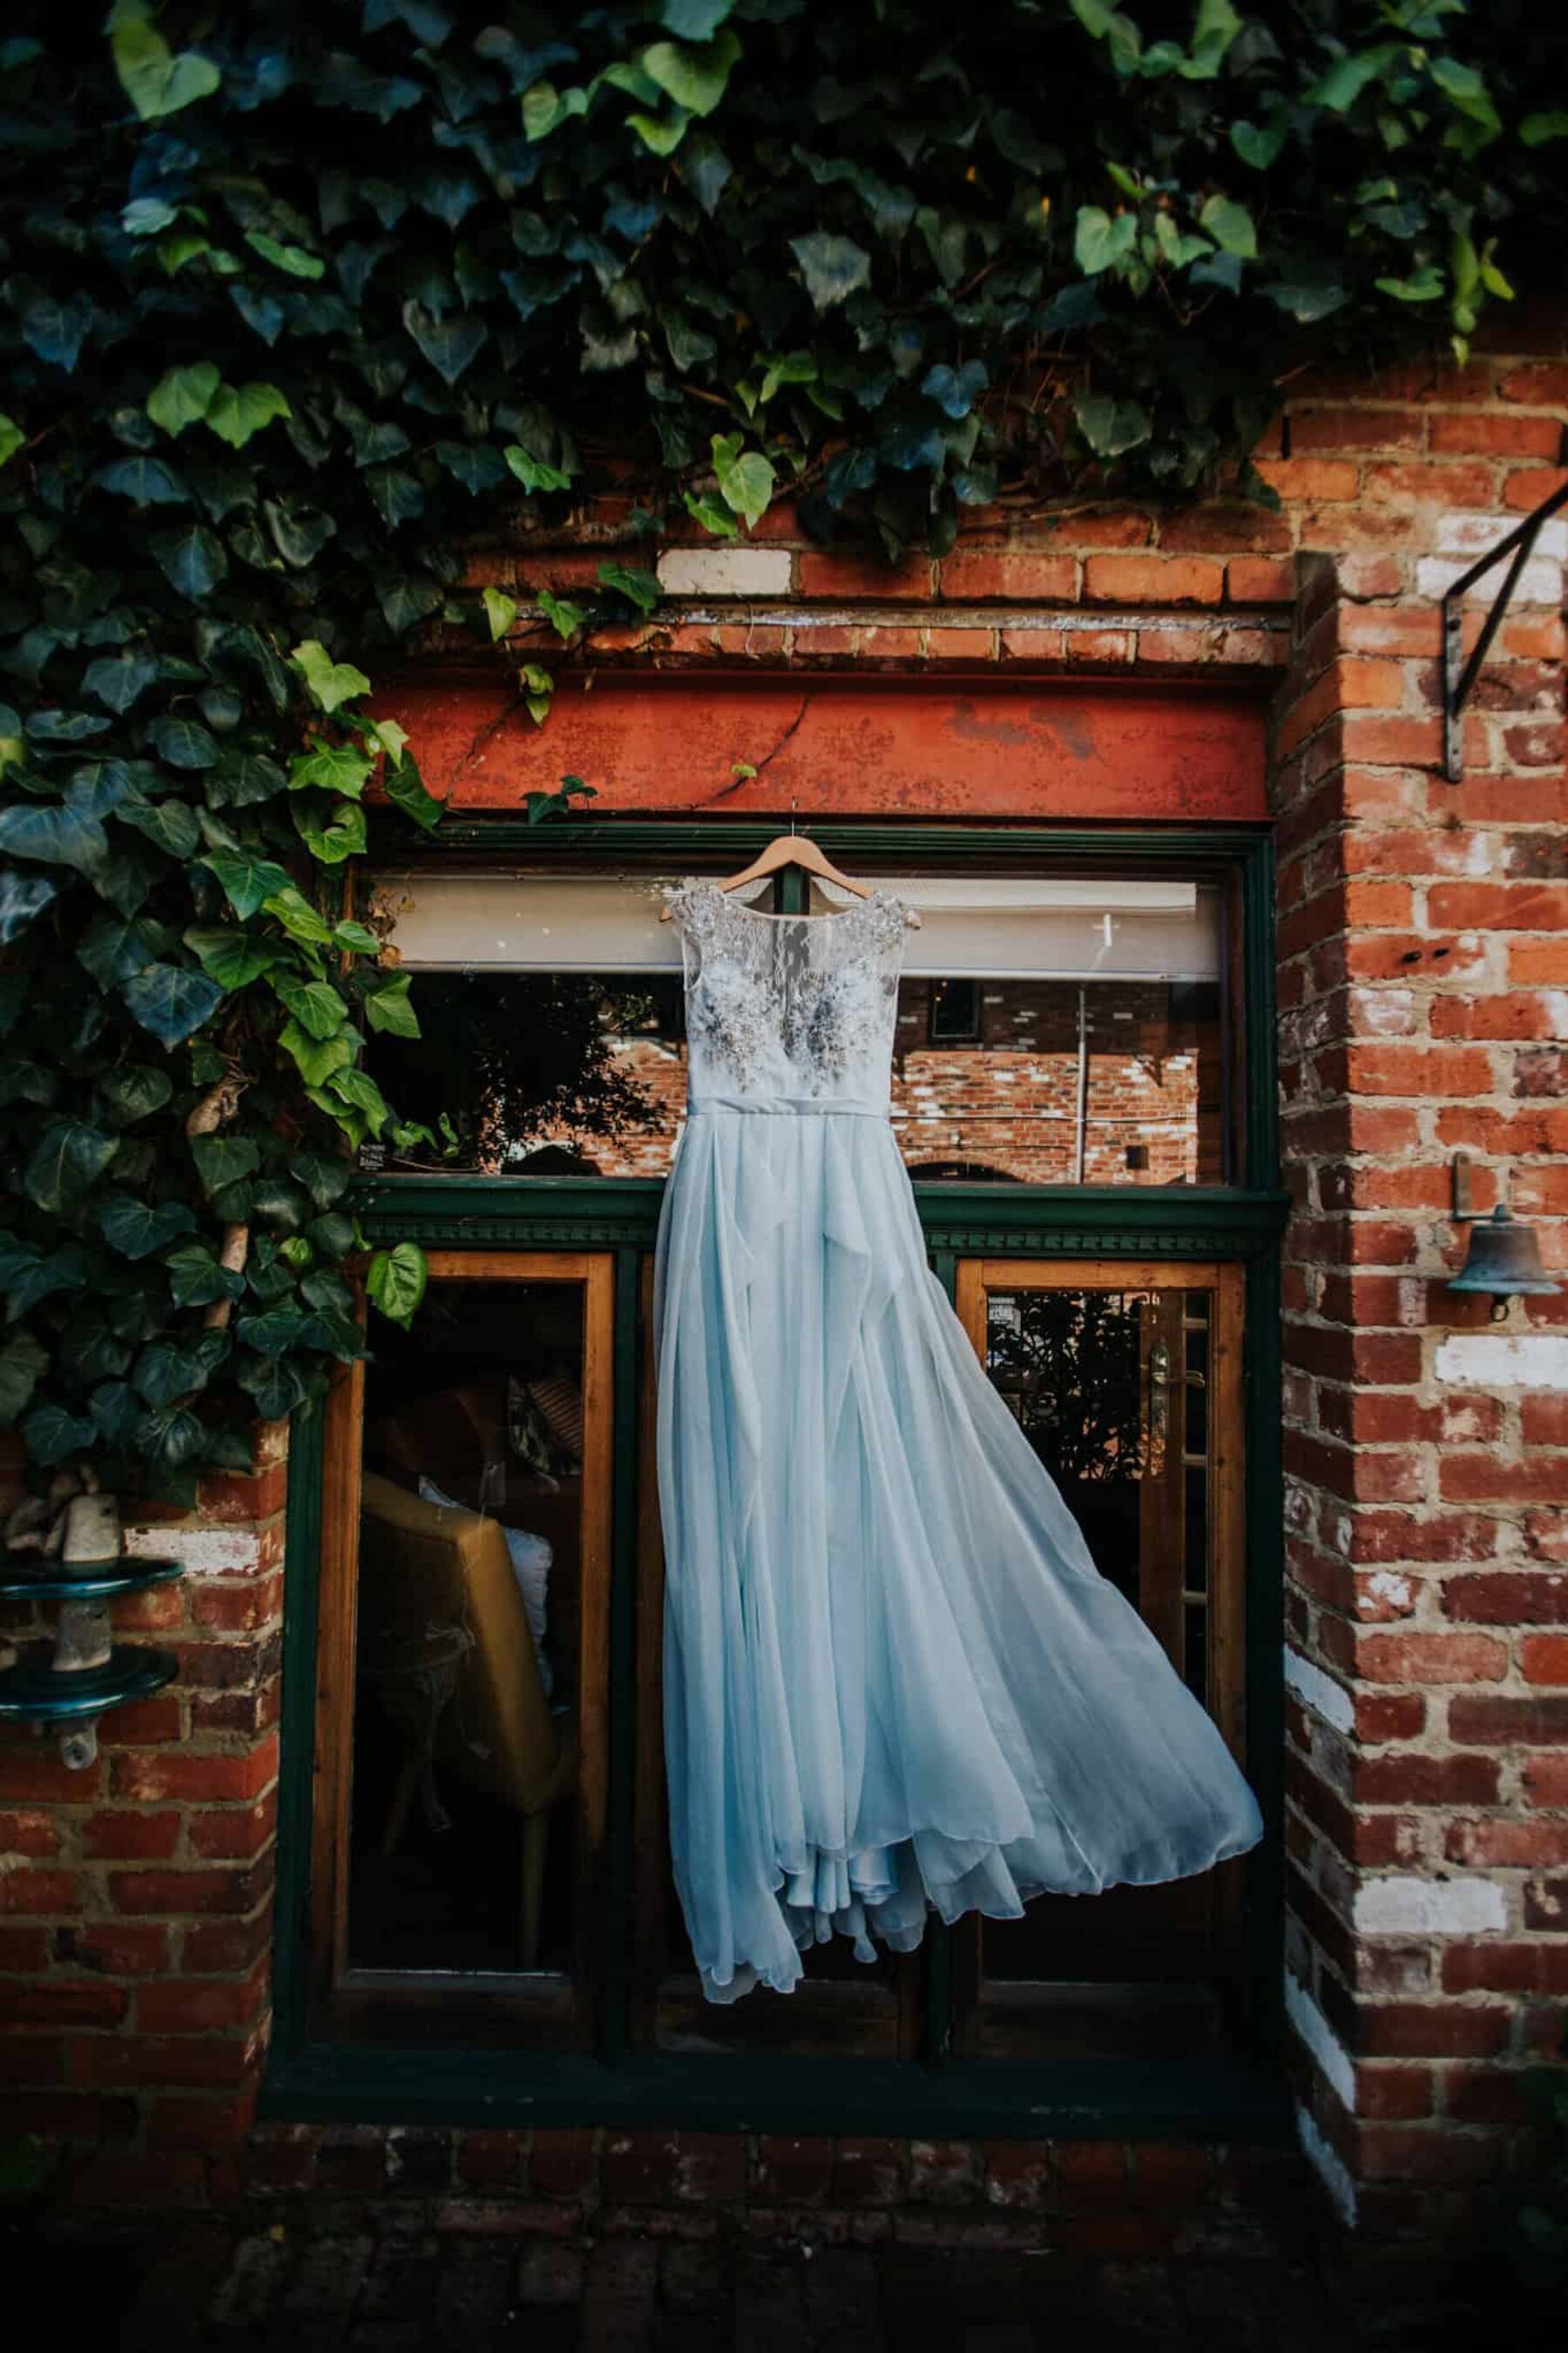 Pale blue wedding dress